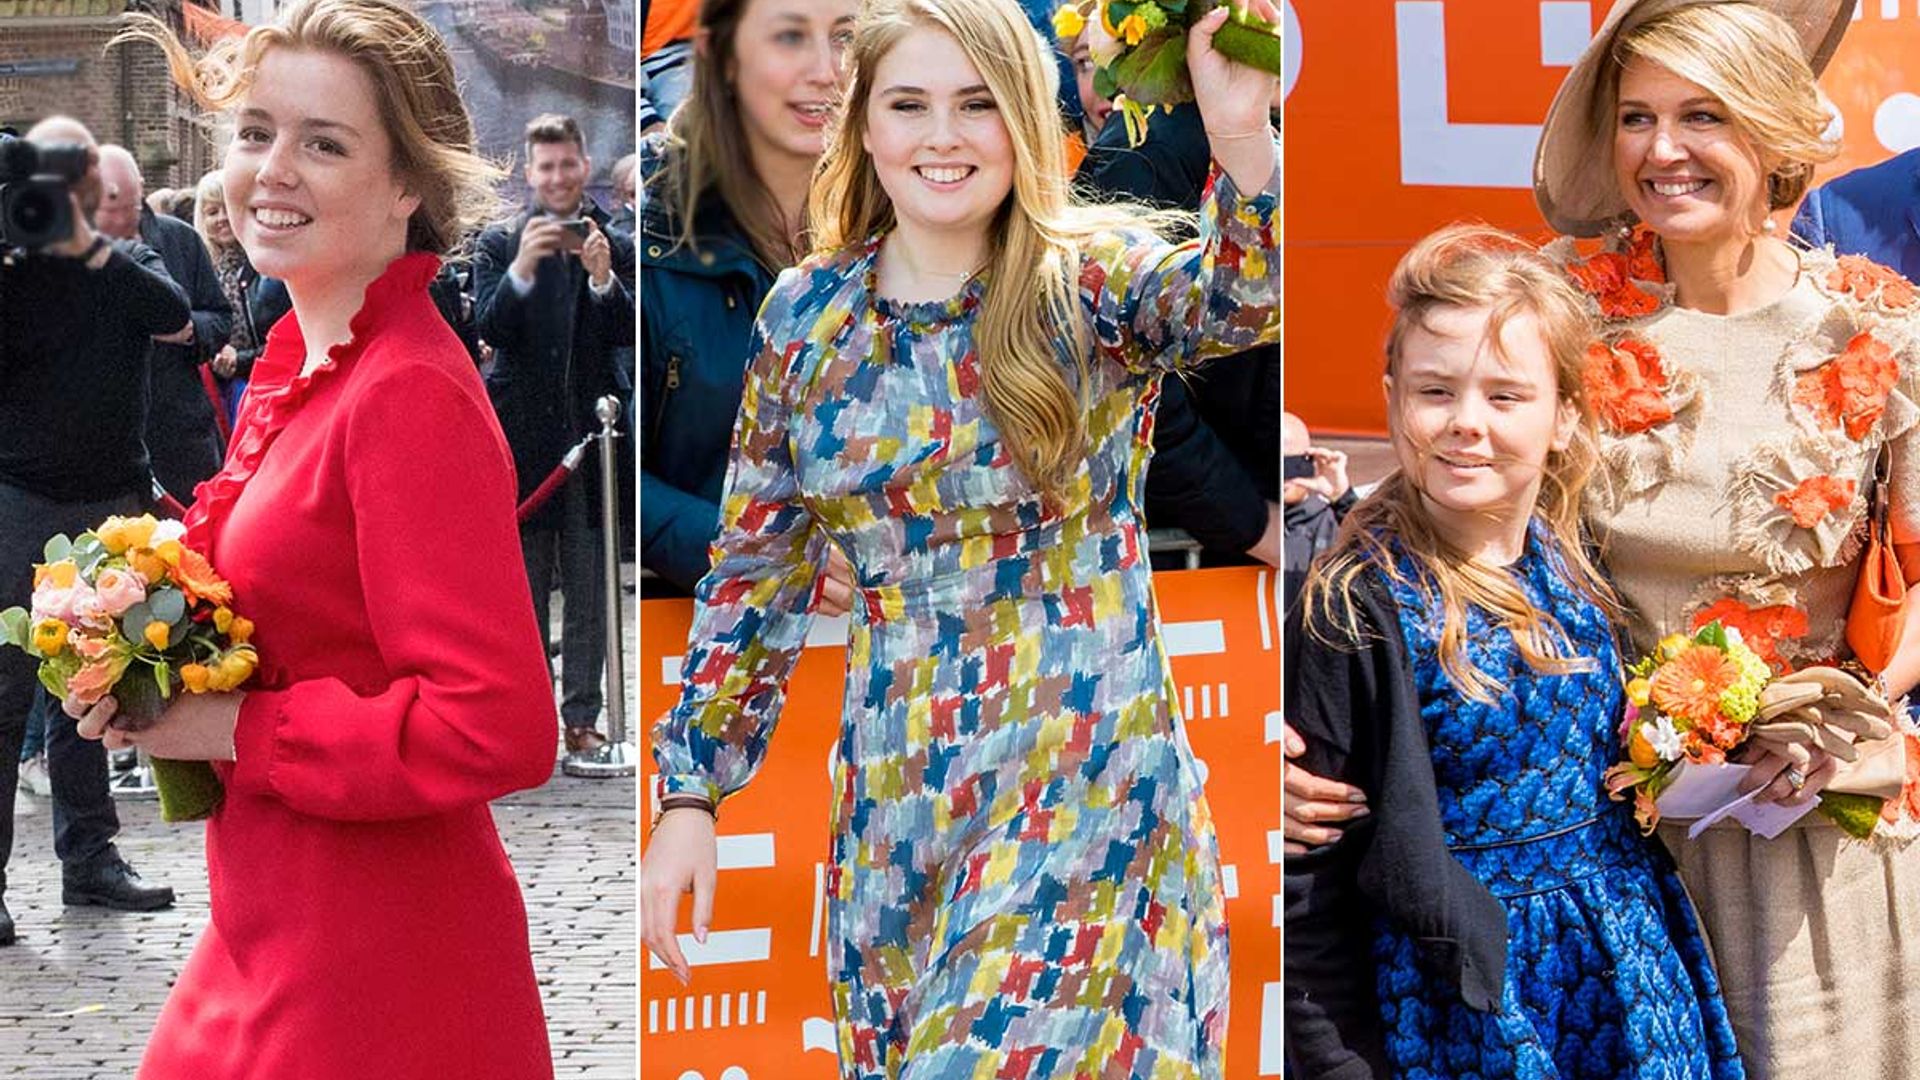 Celebrity daily edit: Dutch royals celebrate colourful King's day, Susanna Reid's split - video